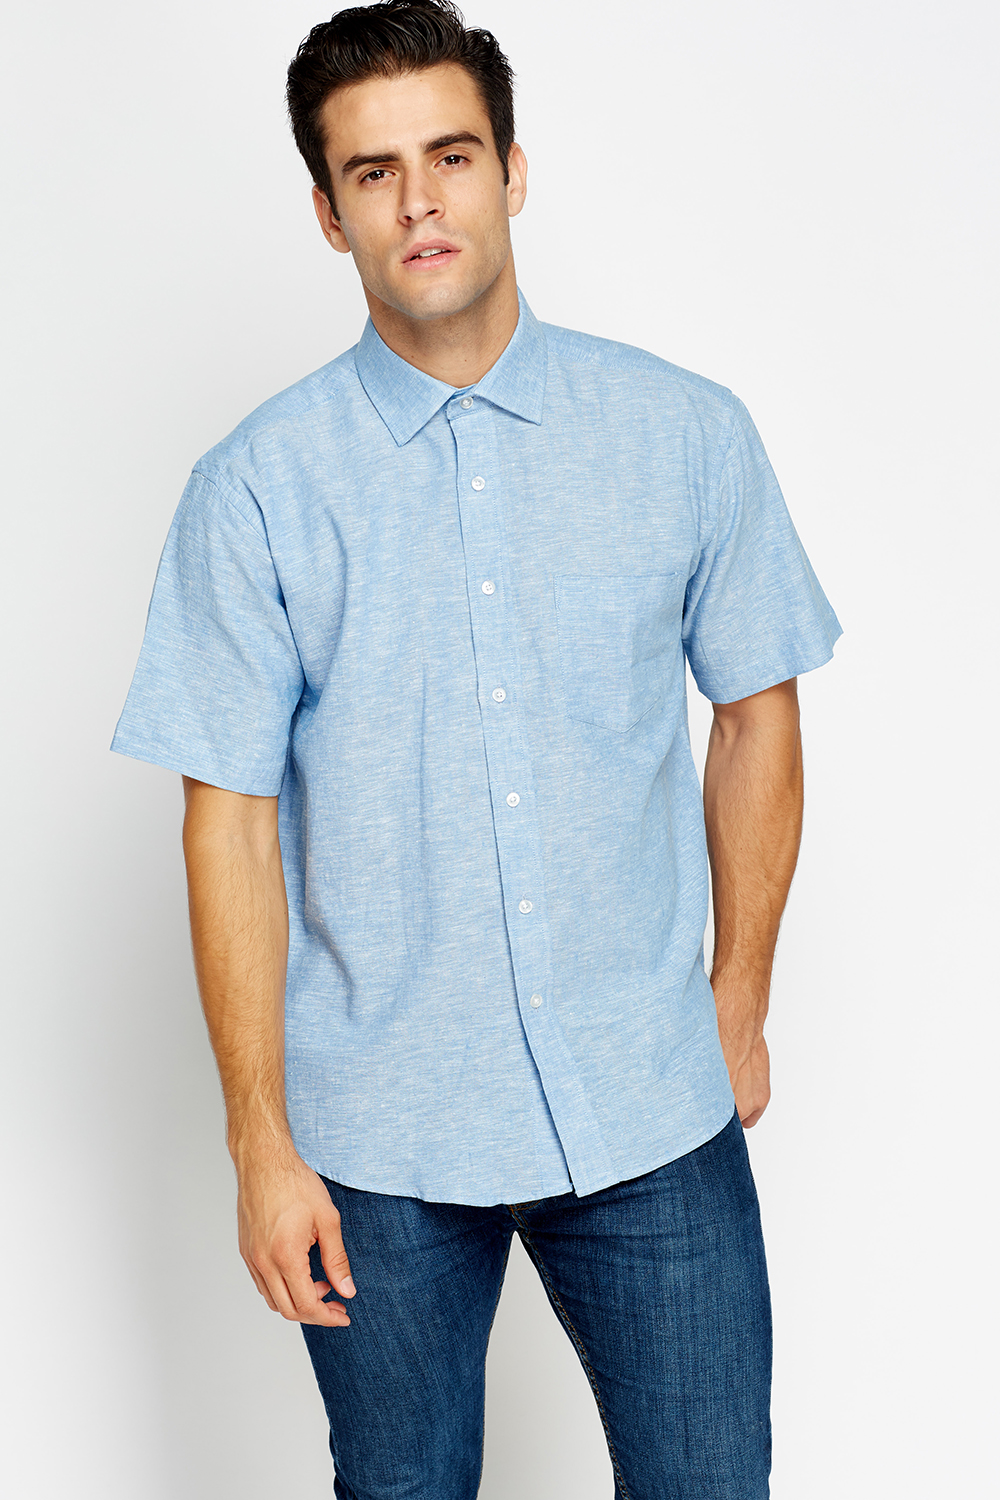 Blue Speckled Short Sleeves Shirt - Just $6